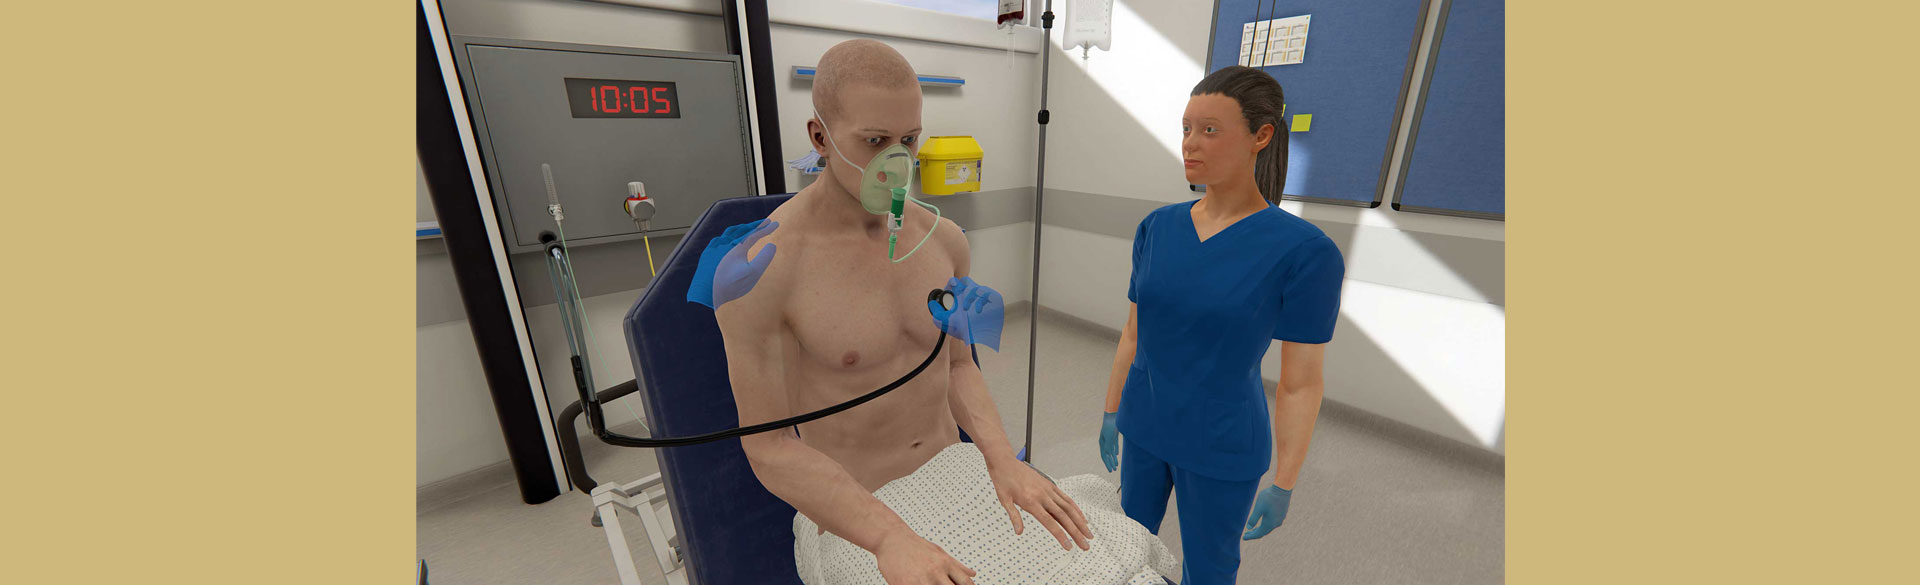 Virtual Medical Emergencies Simulation